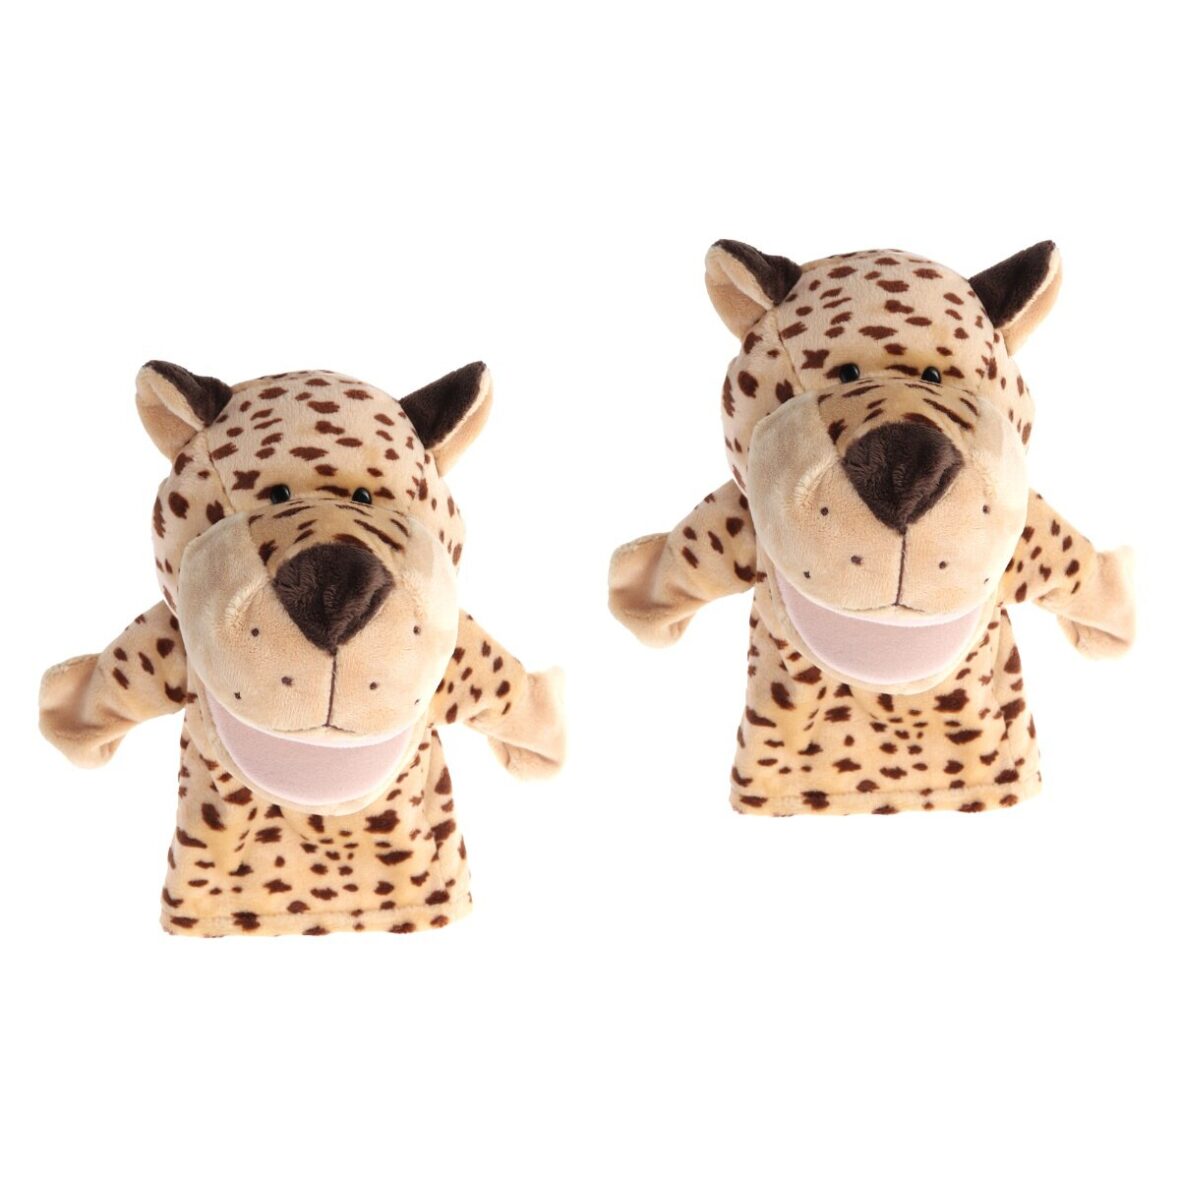 Leopard Hand Puppet Soft Plush Toy